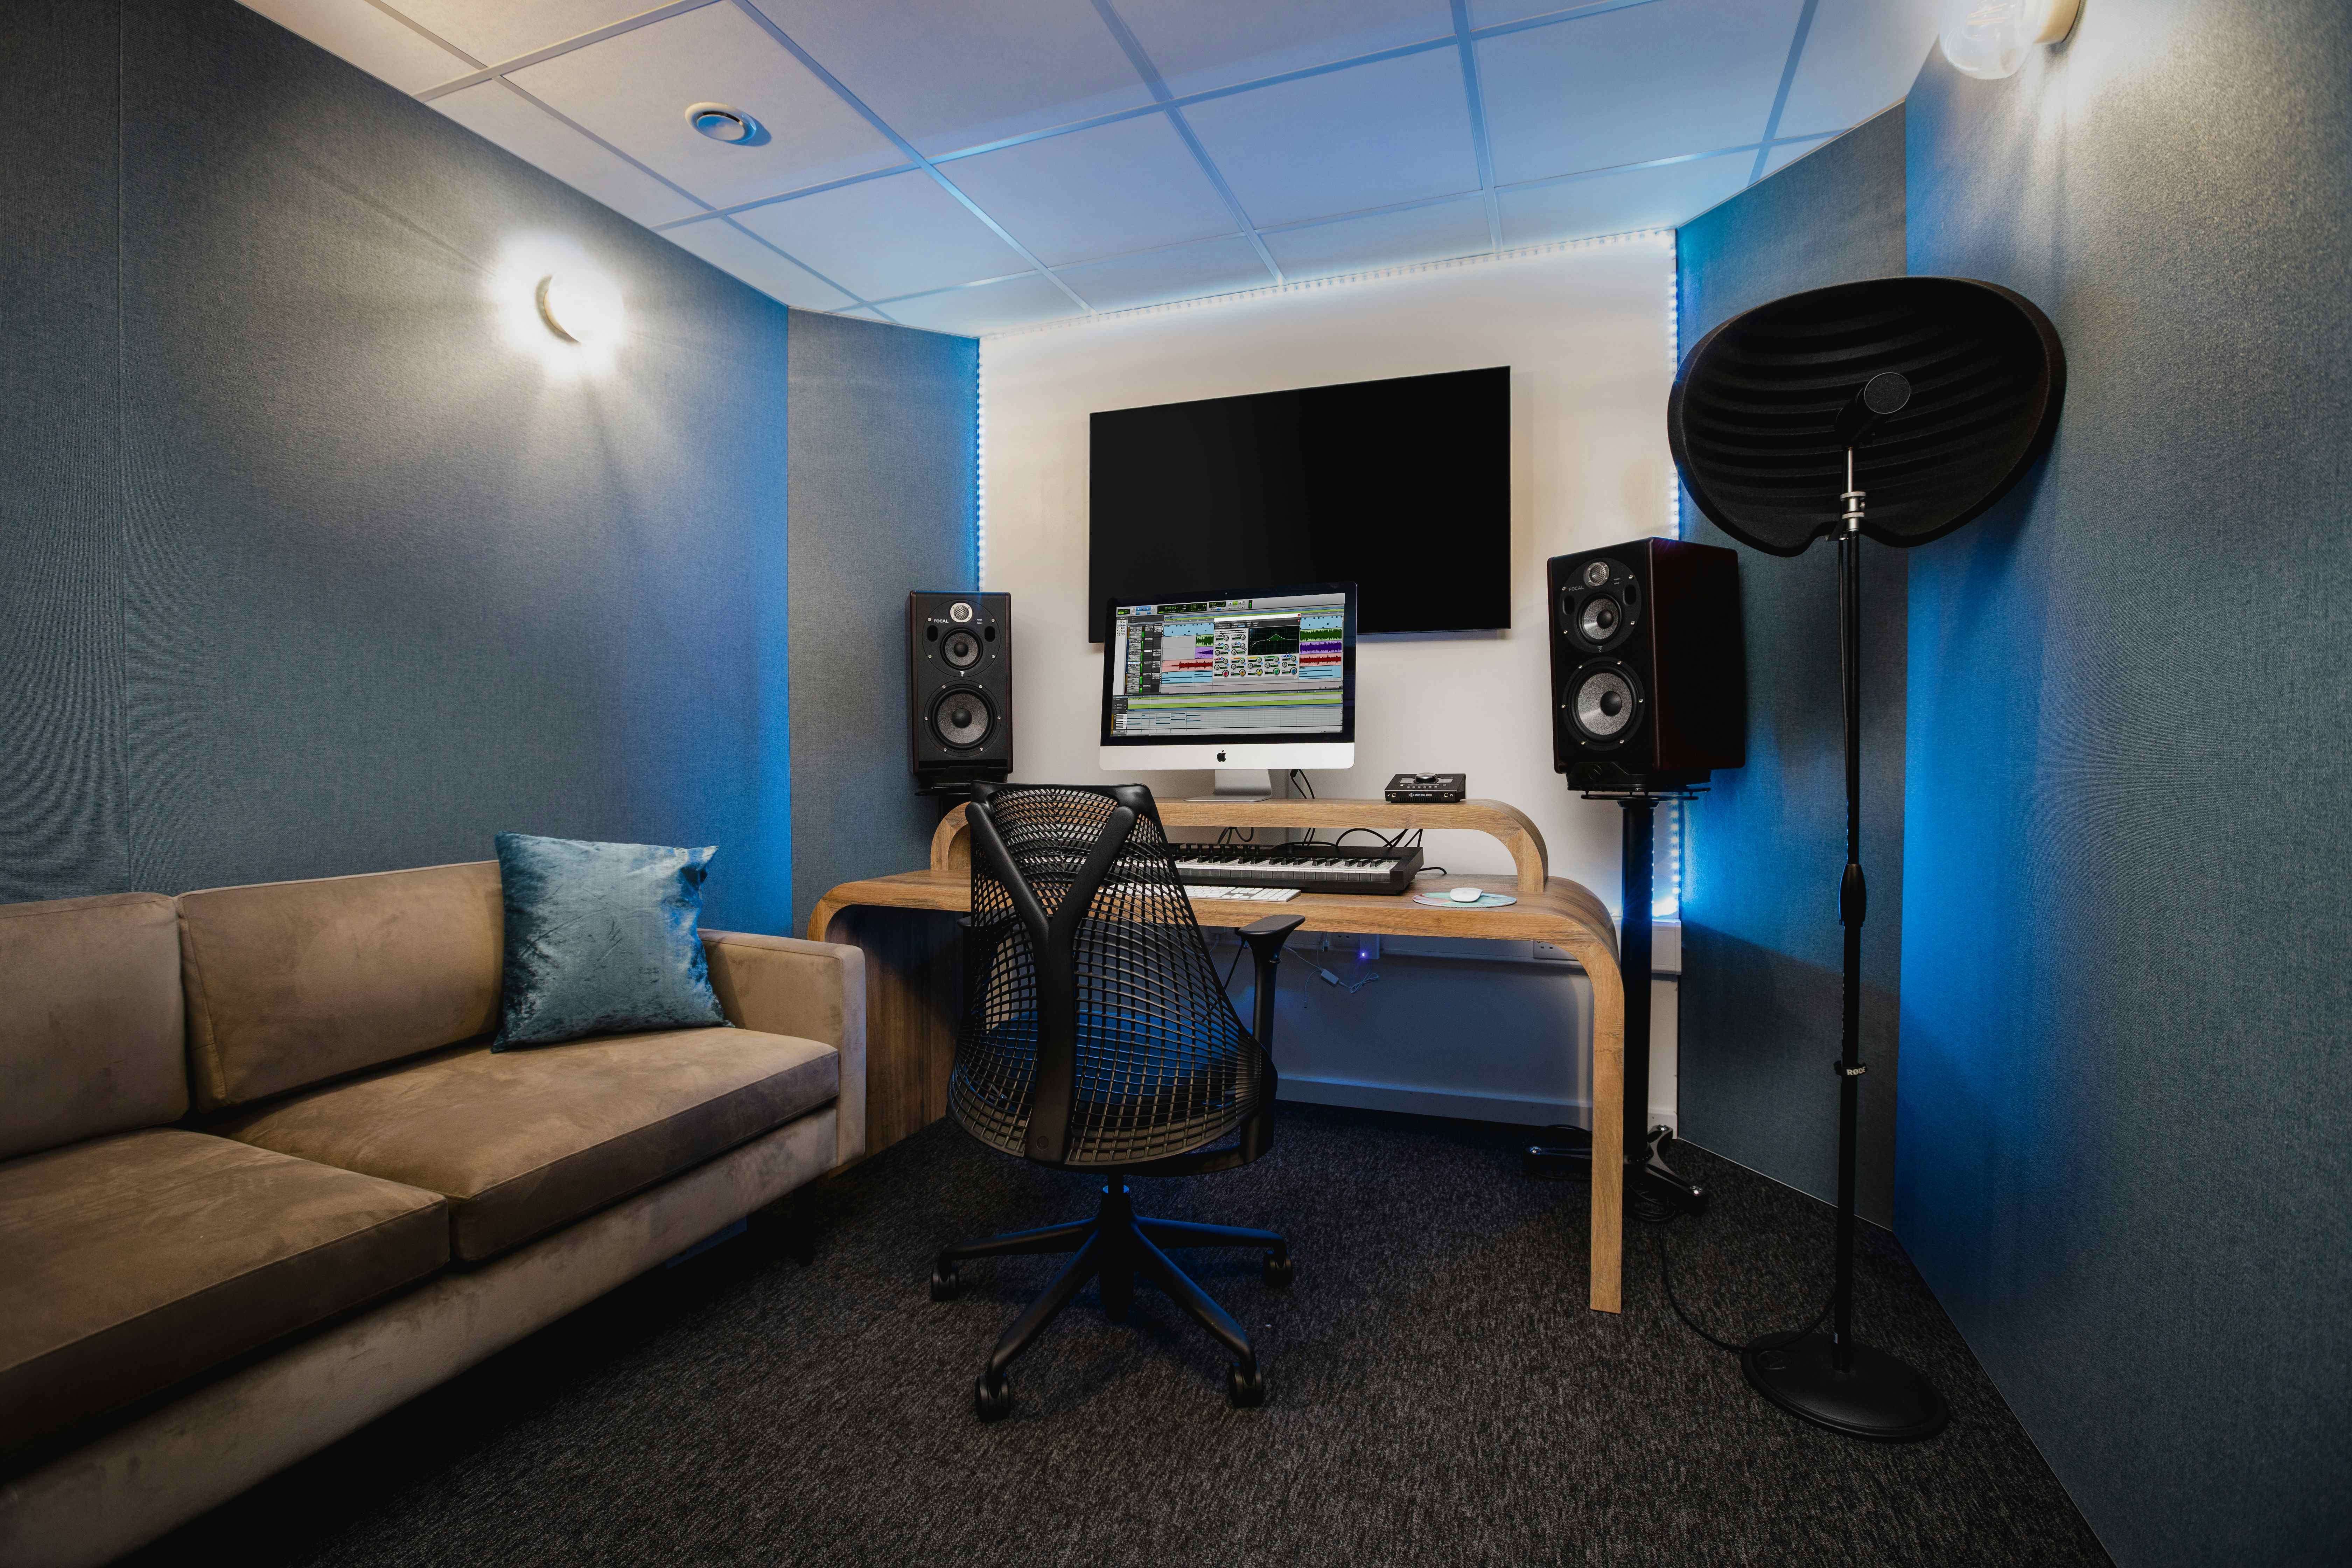 Production Music Studio, the halley